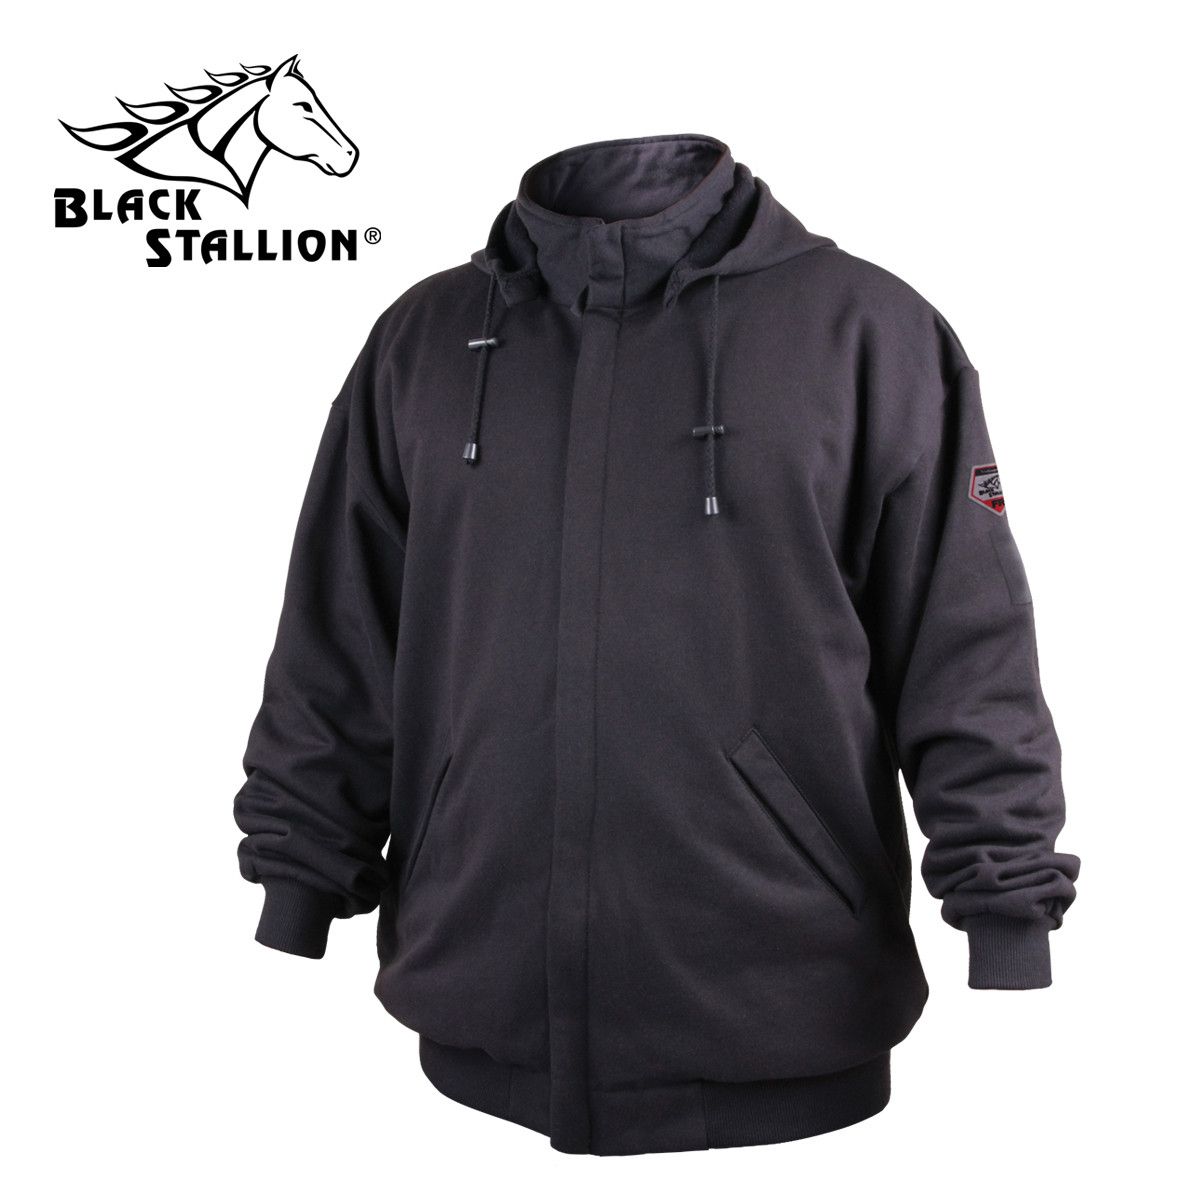 Revco TruGuard 200 FR Black Cotton Hooded Sweatshirt